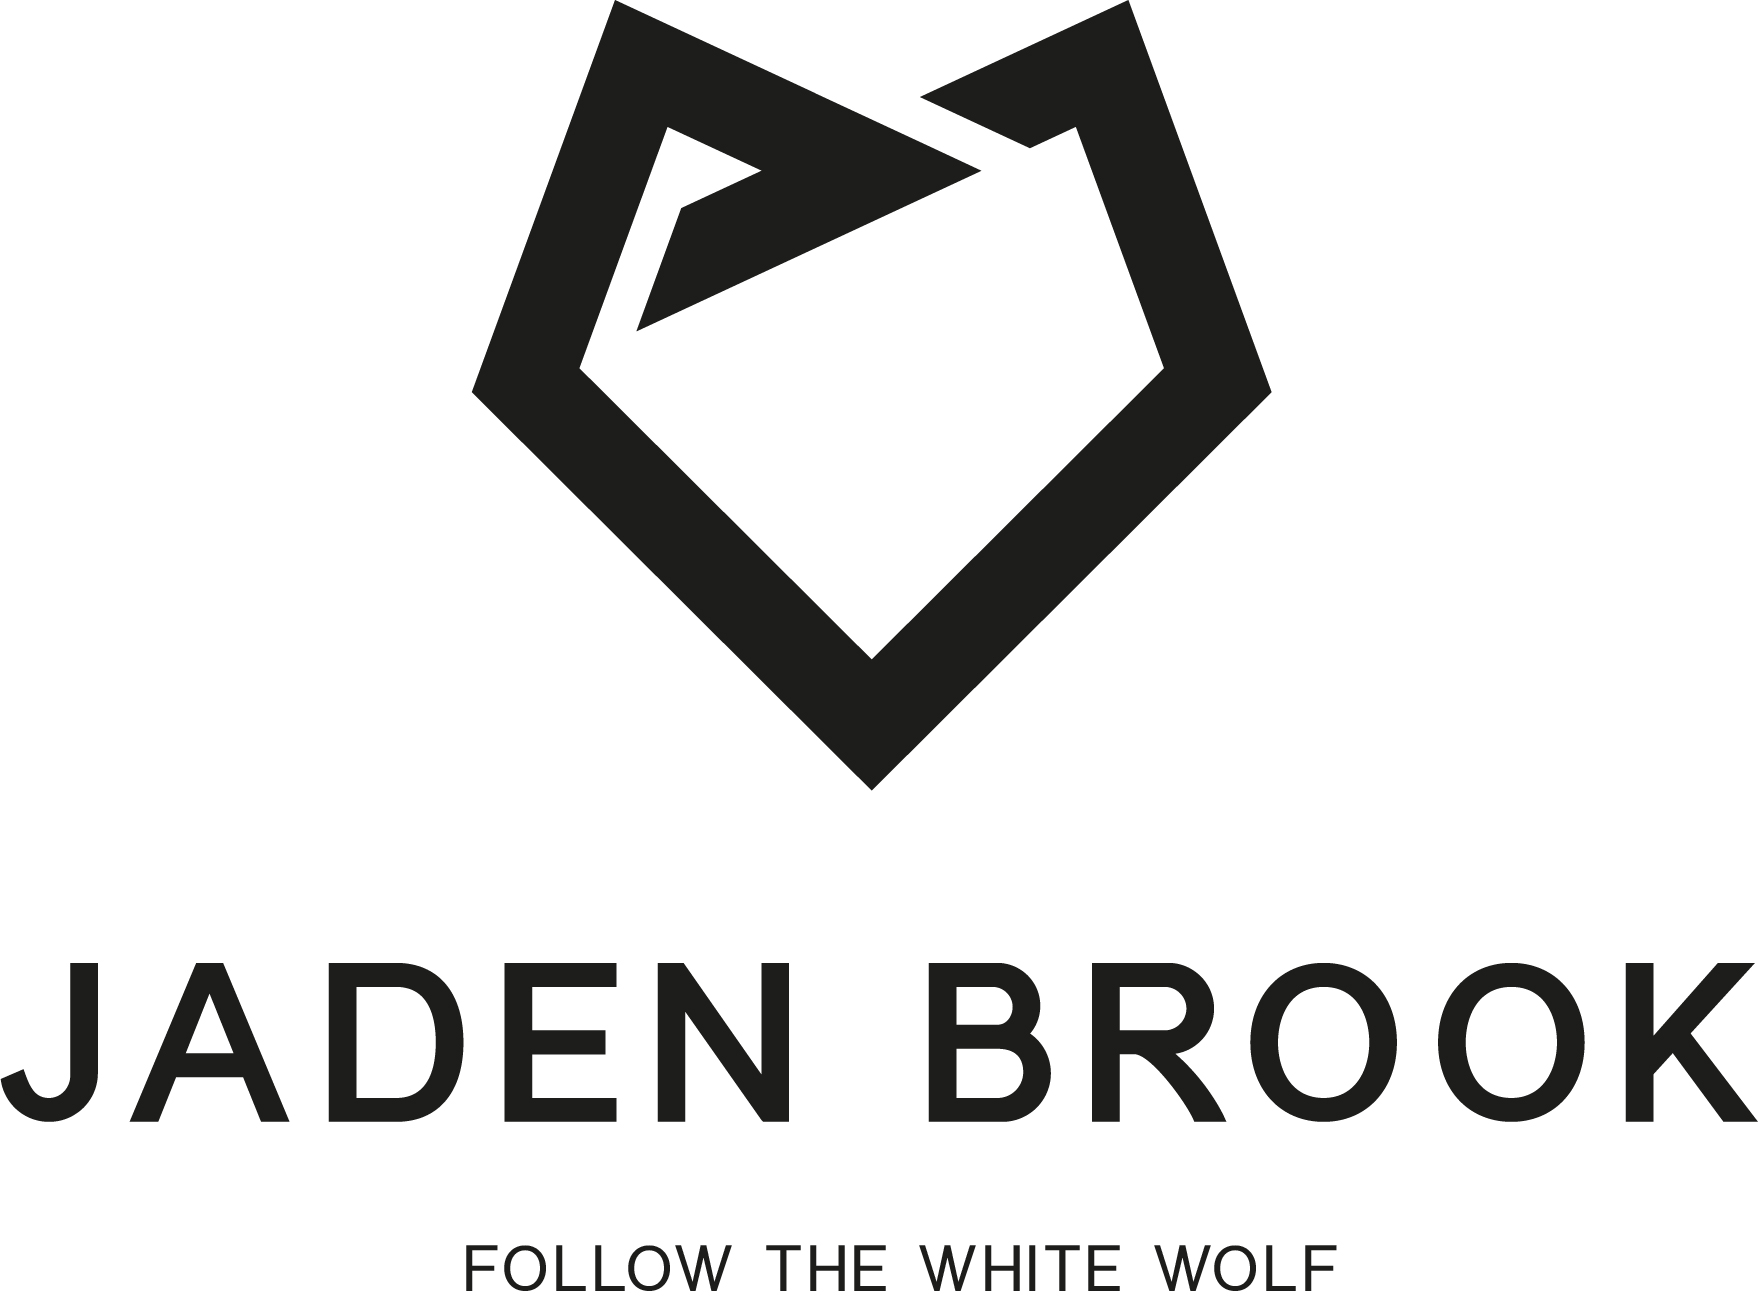 JADEN BROOK FOLLOW THE WHITE WOLF